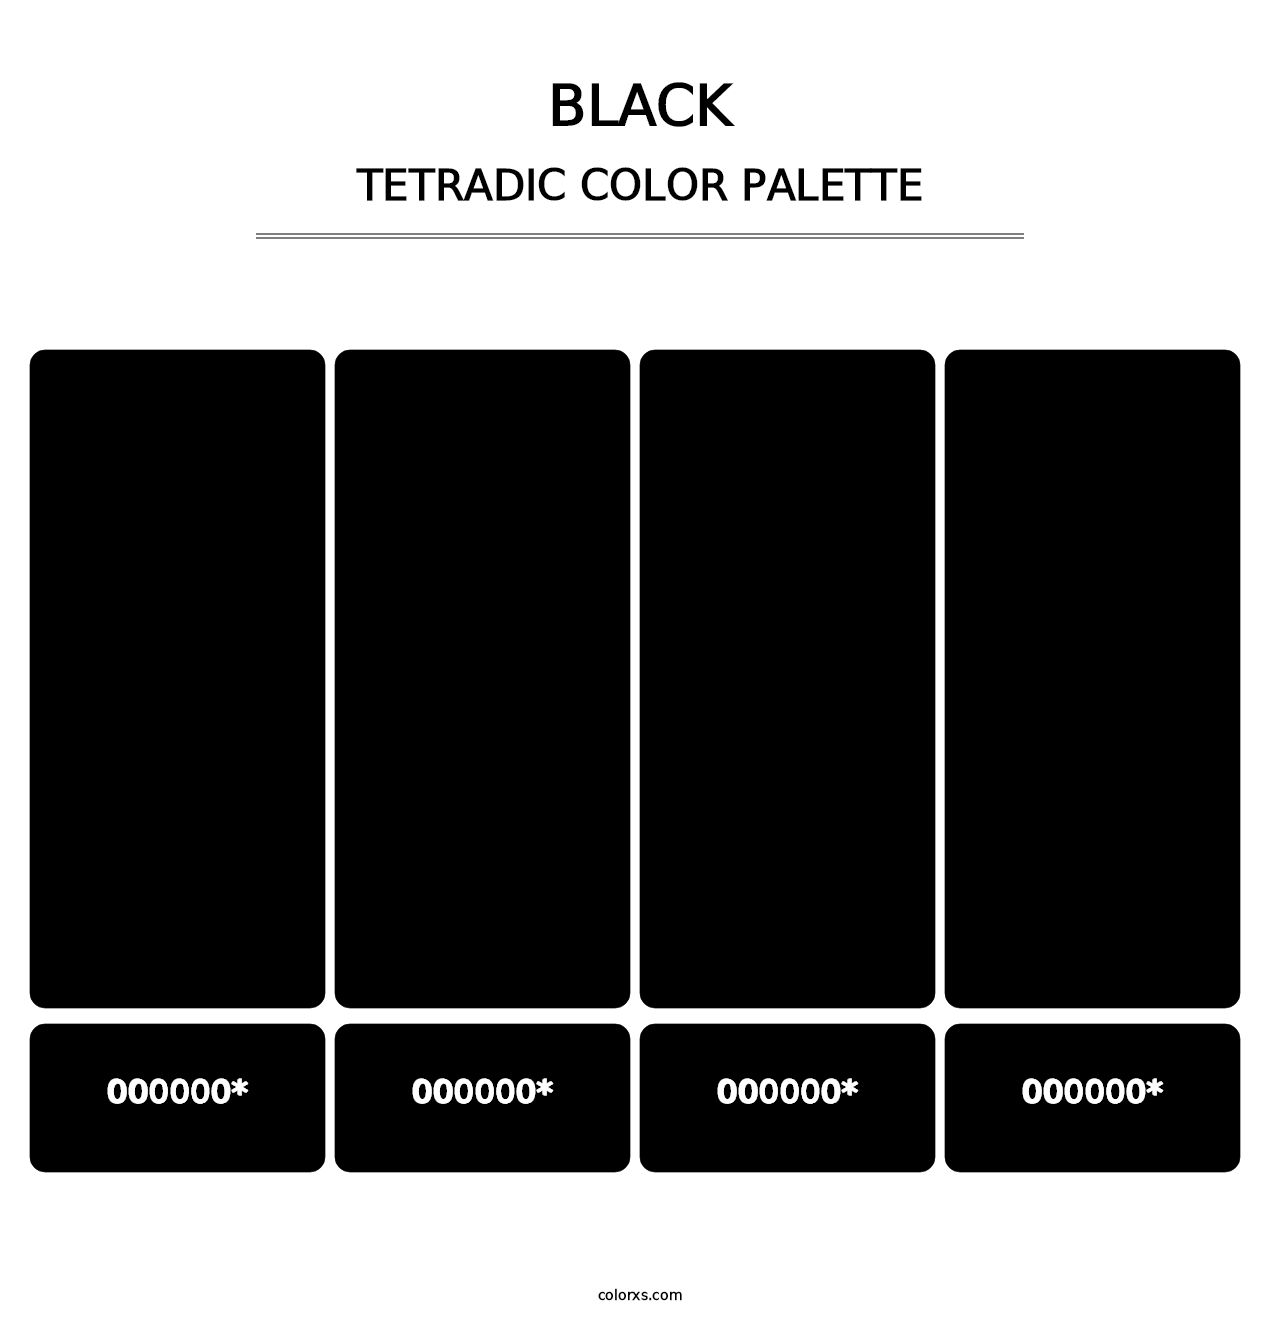 Black - Tetradic Color Palette